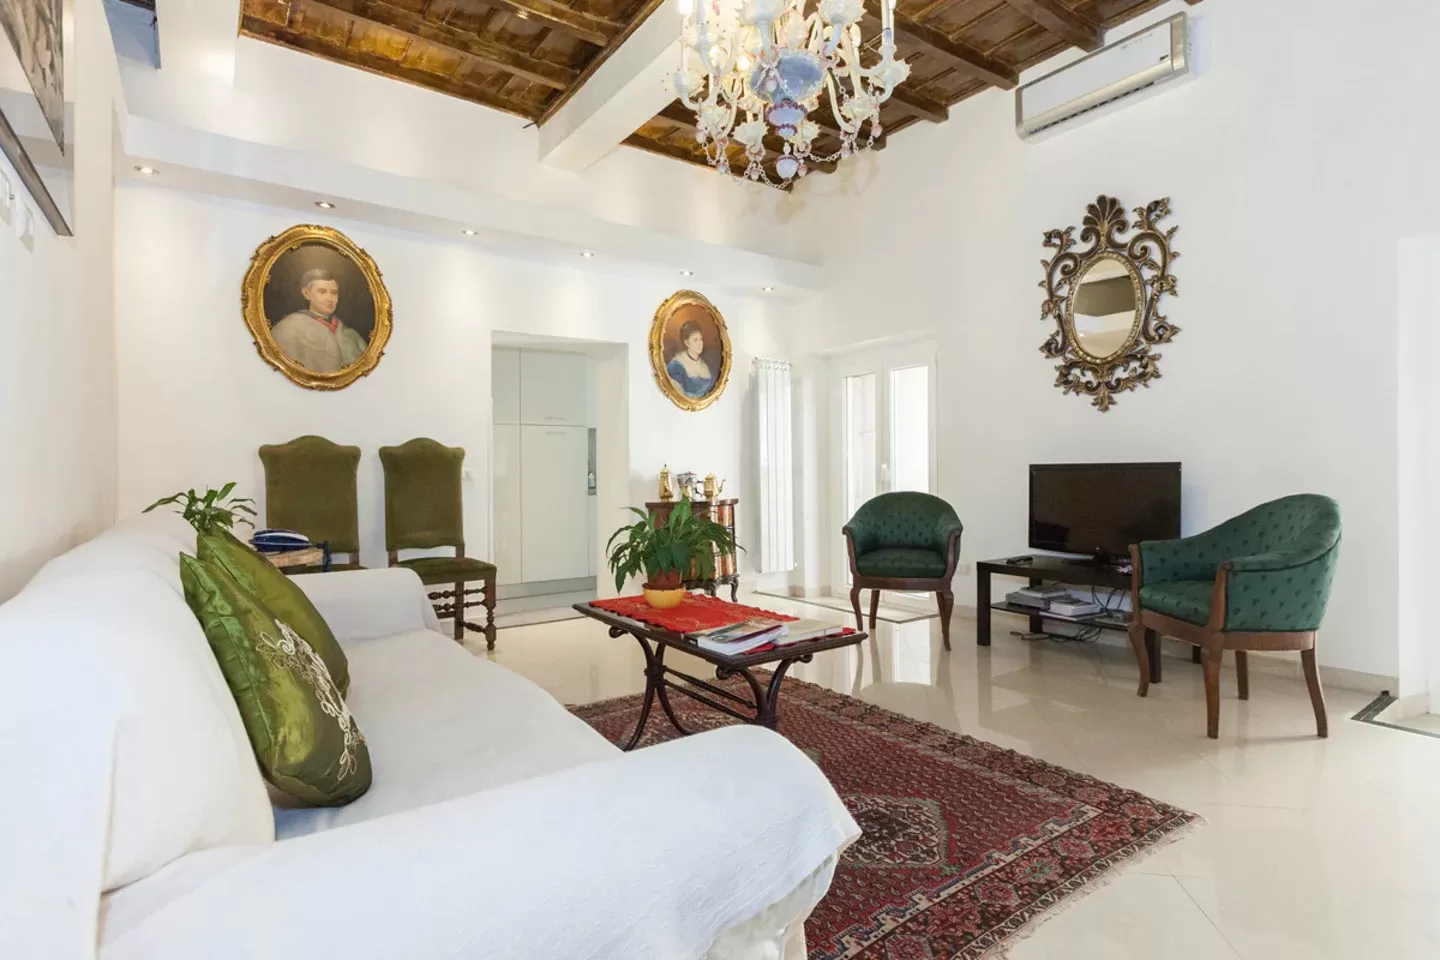 Best Hotels in Rome near Spanish Steps - Lounge room in La Duchessa apartment